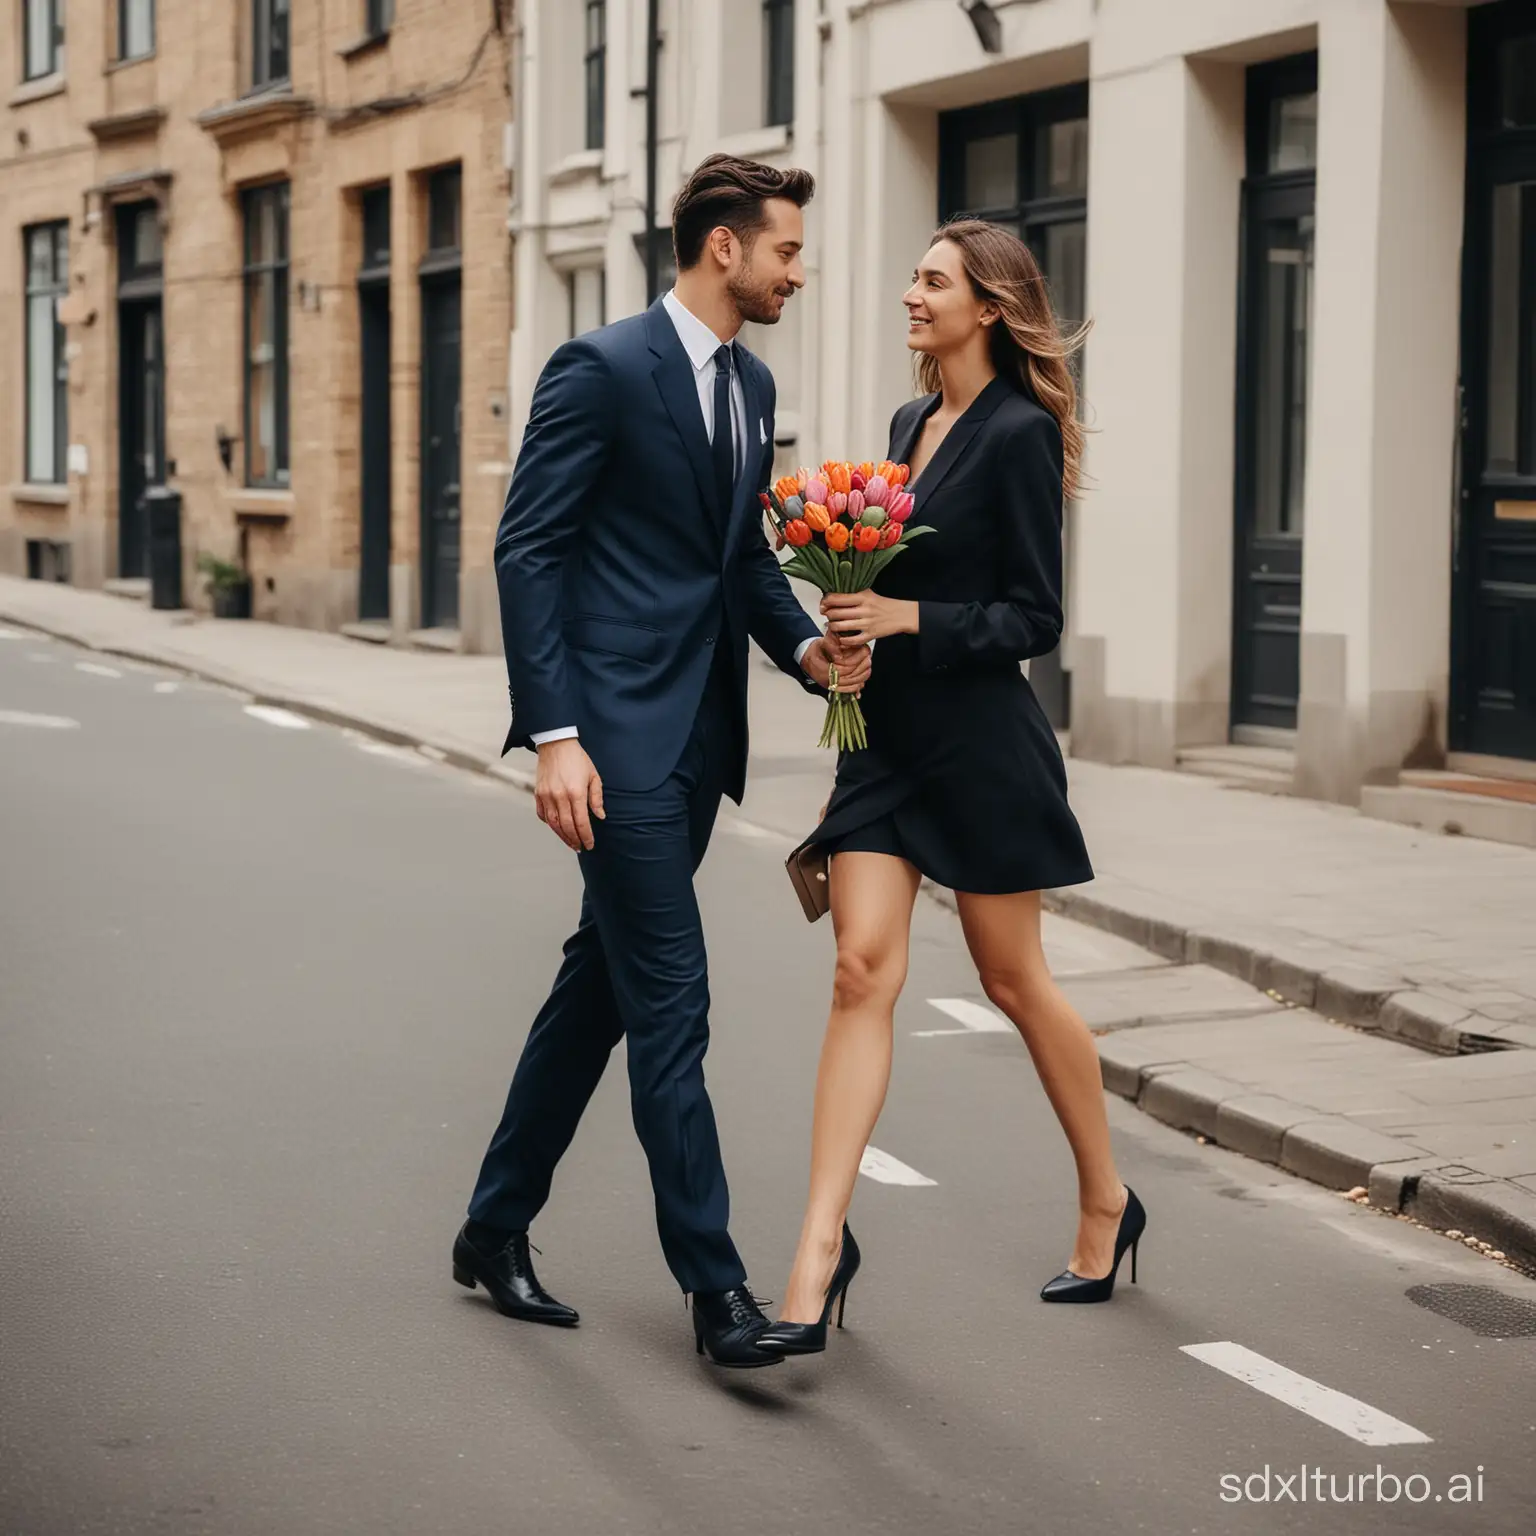 Romantic-Couple-Strolling-with-Tulip-Bouquet-in-Elegant-Attire